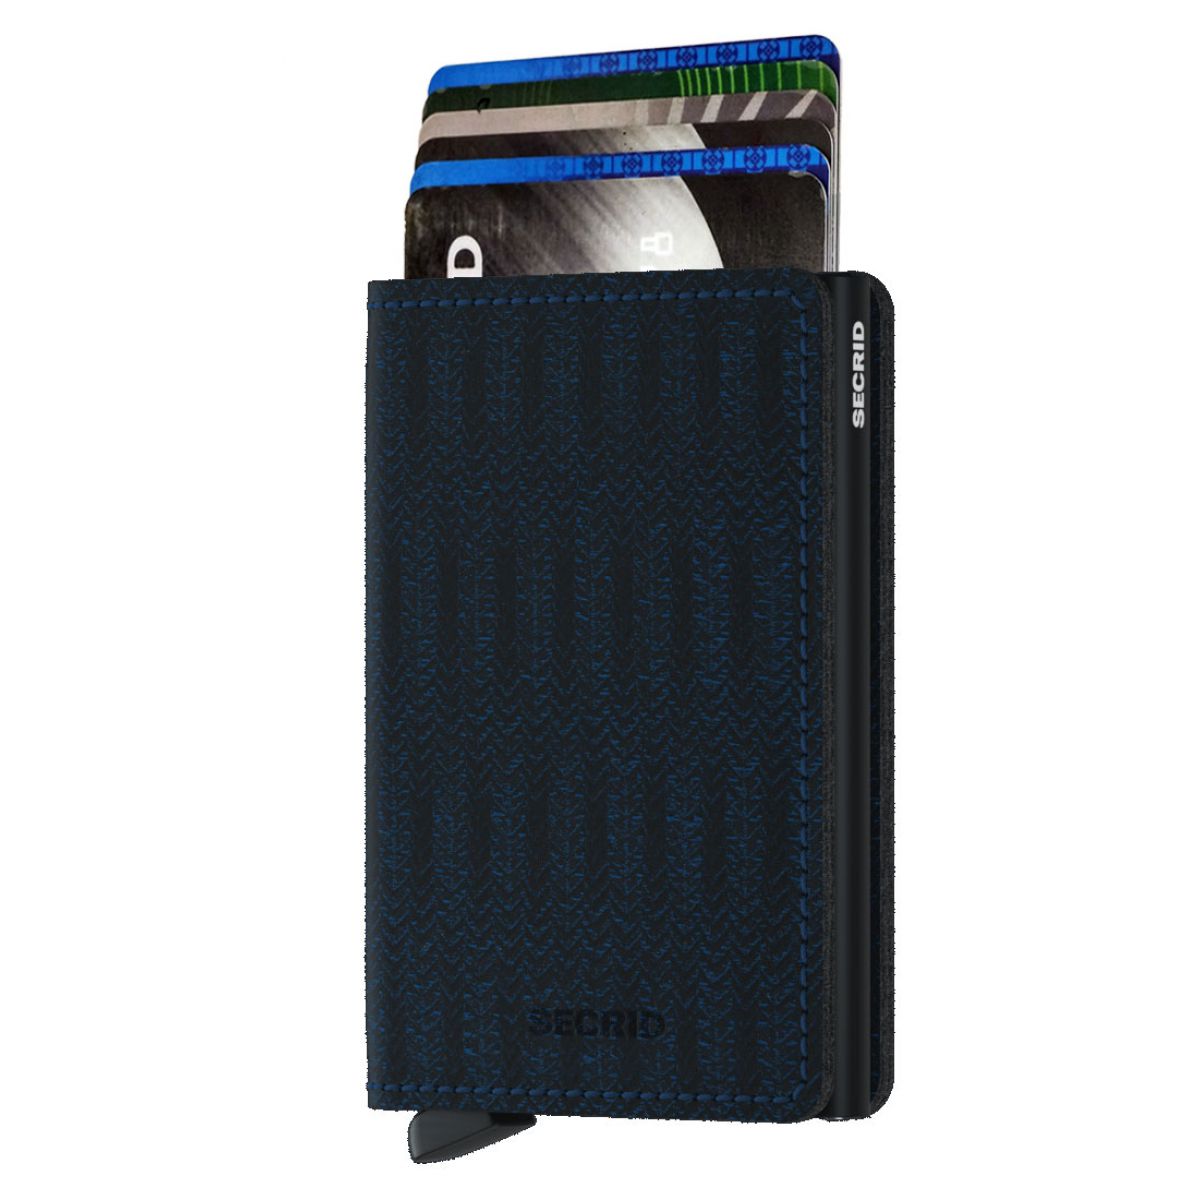 Secrid slim wallet leather - SDA-navy - 45,41€